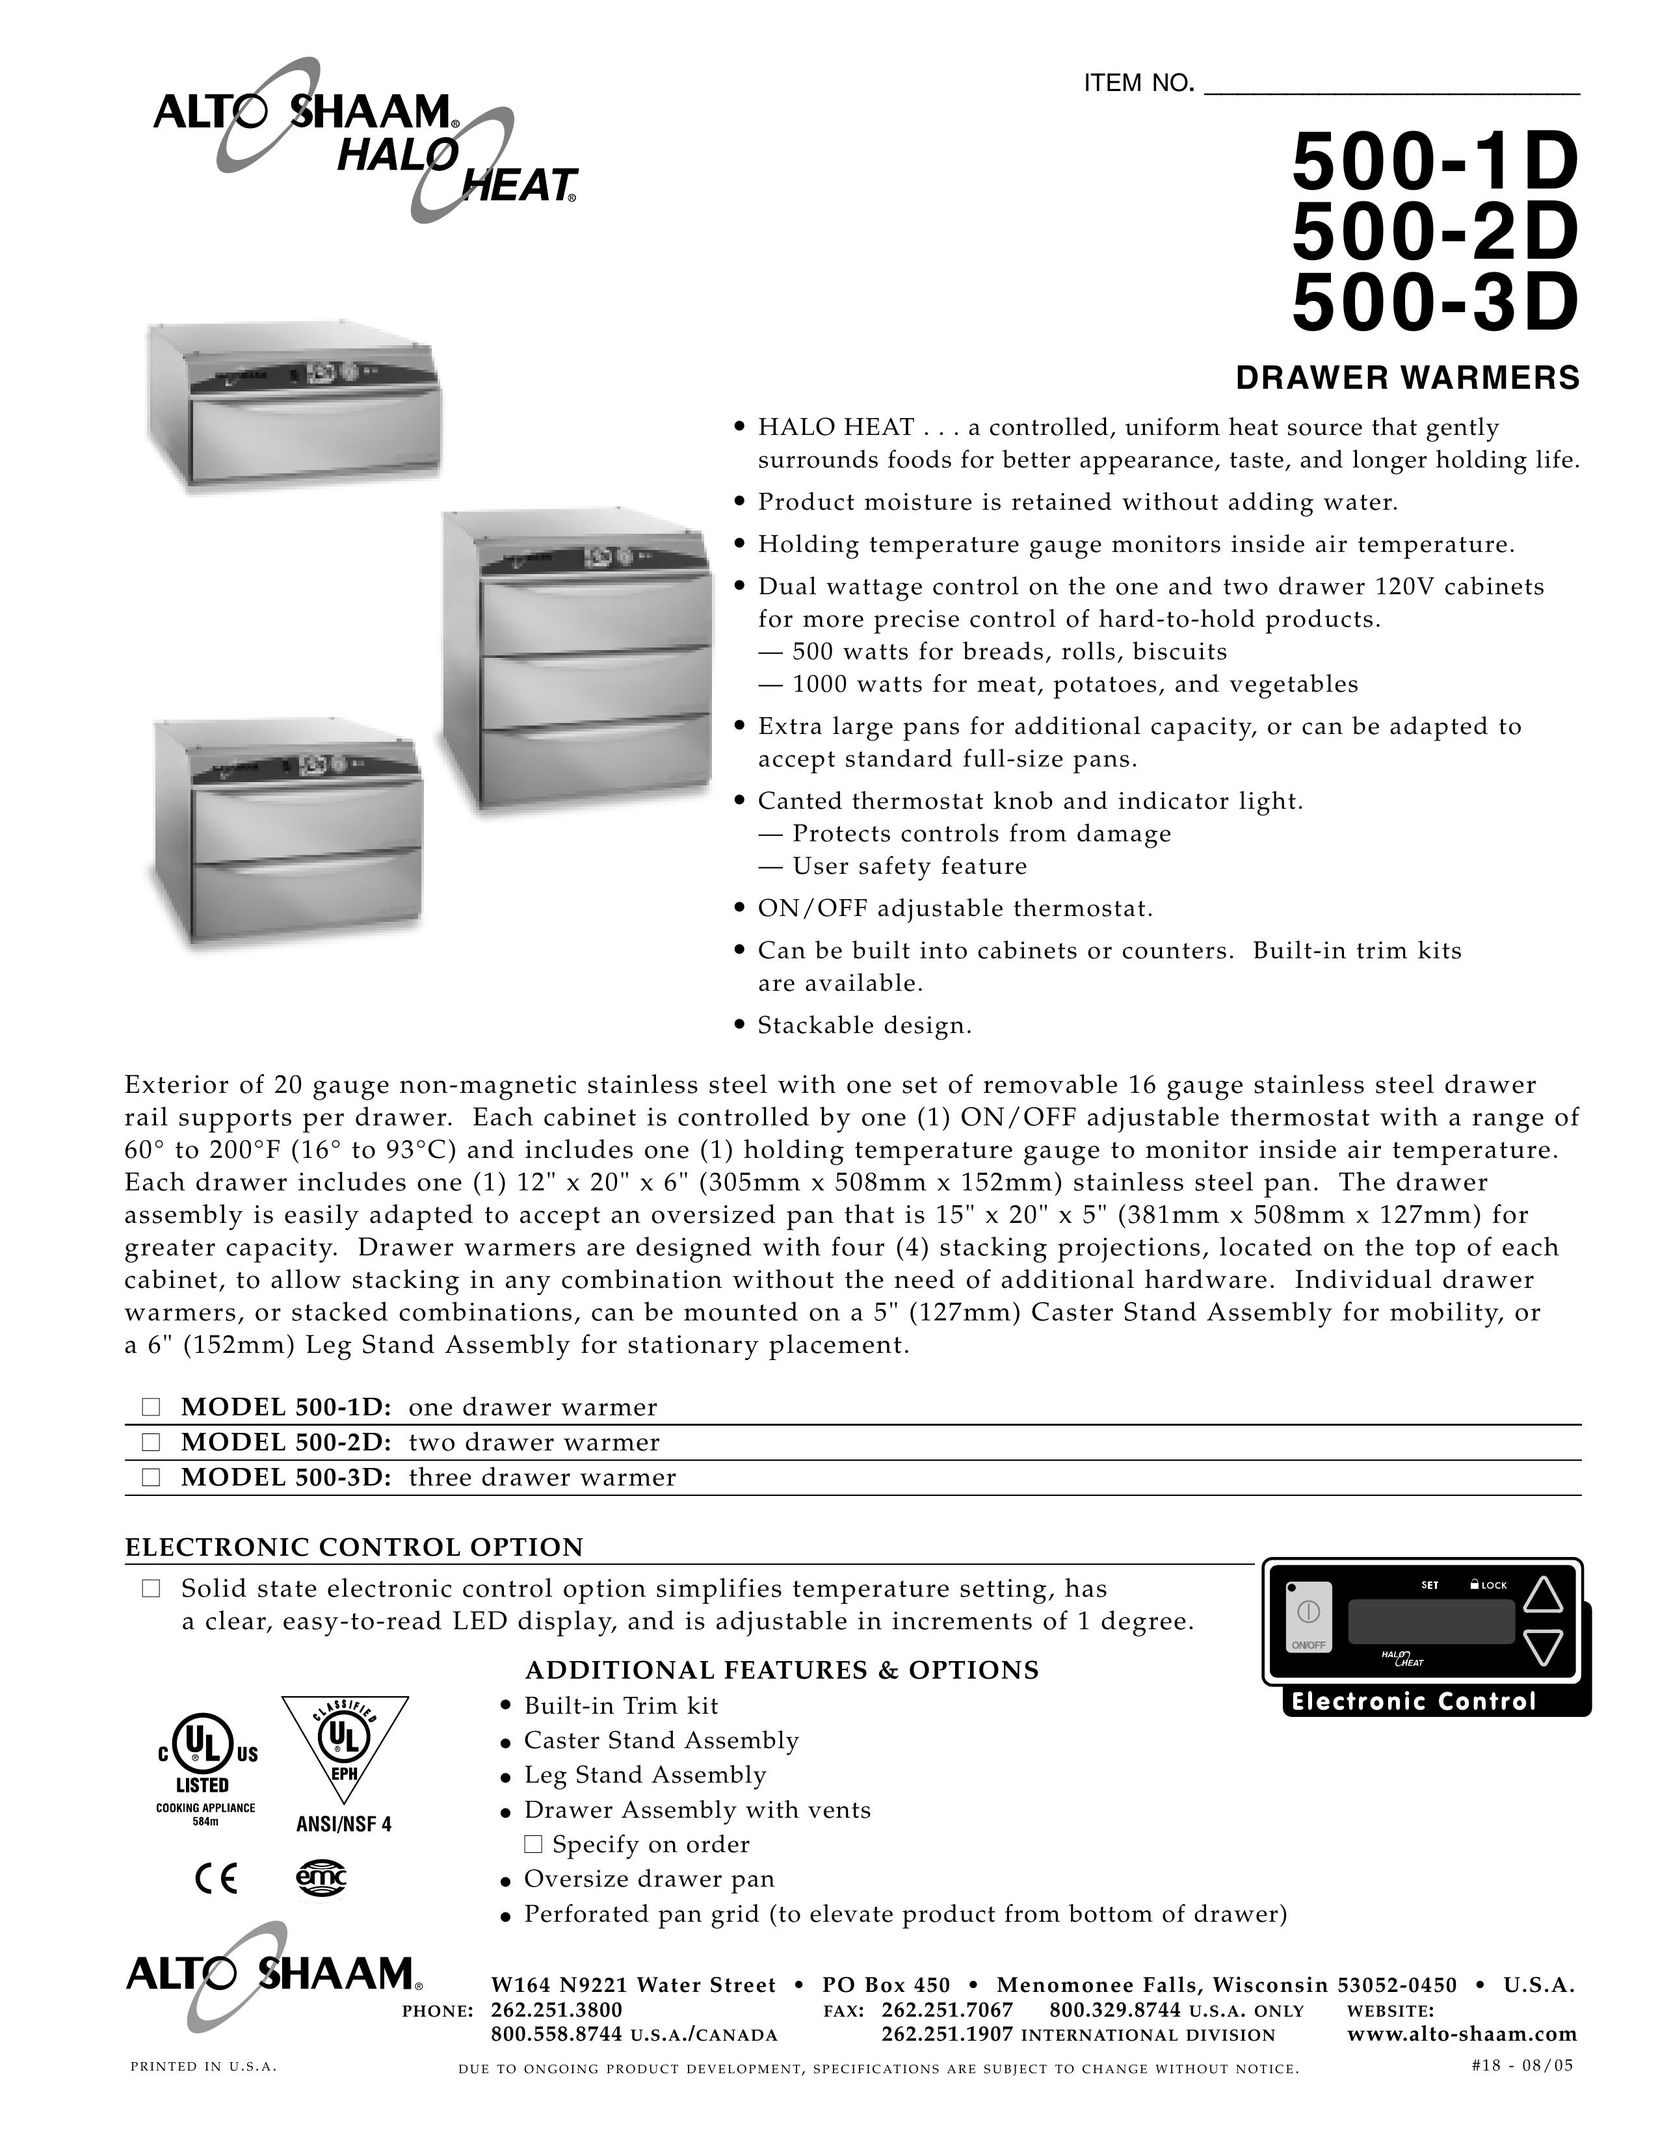 Alto-Shaam 500-1D Food Warmer User Manual